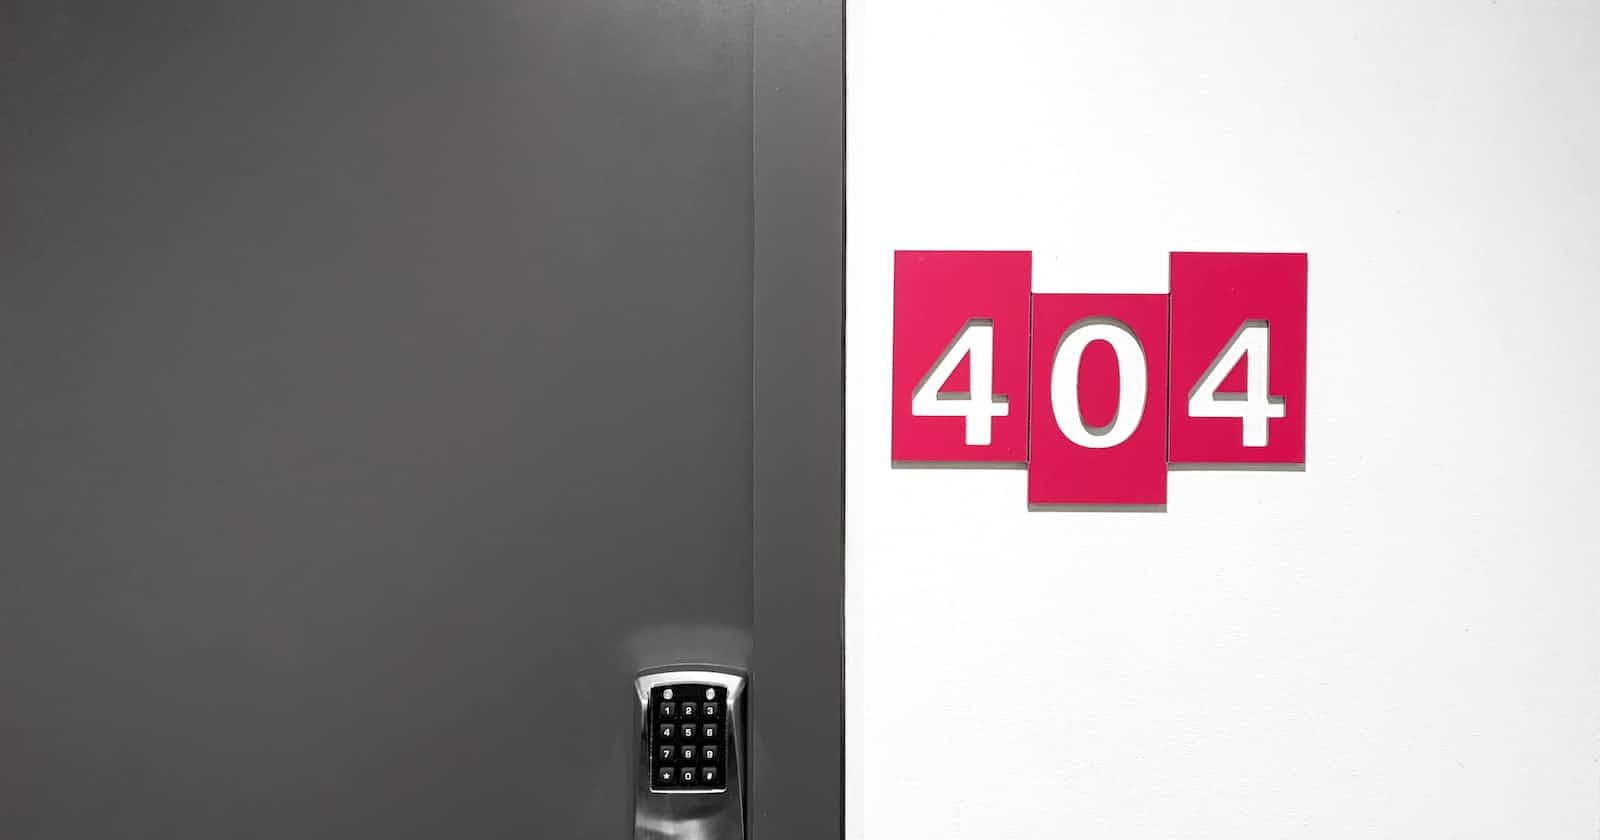 Project: Let's design 404 Page